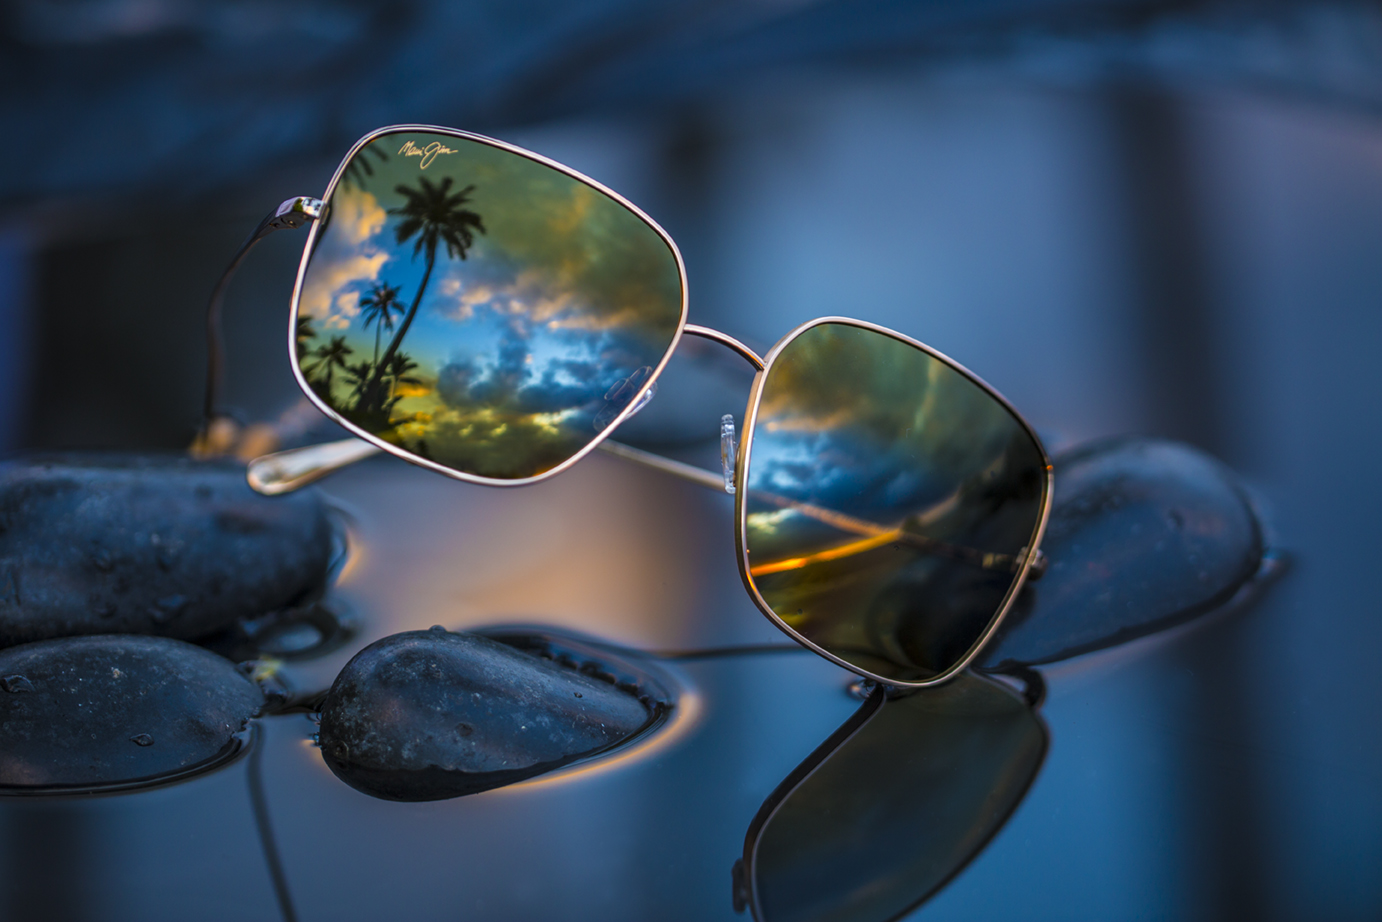 Triton sunglasses on rocks over water